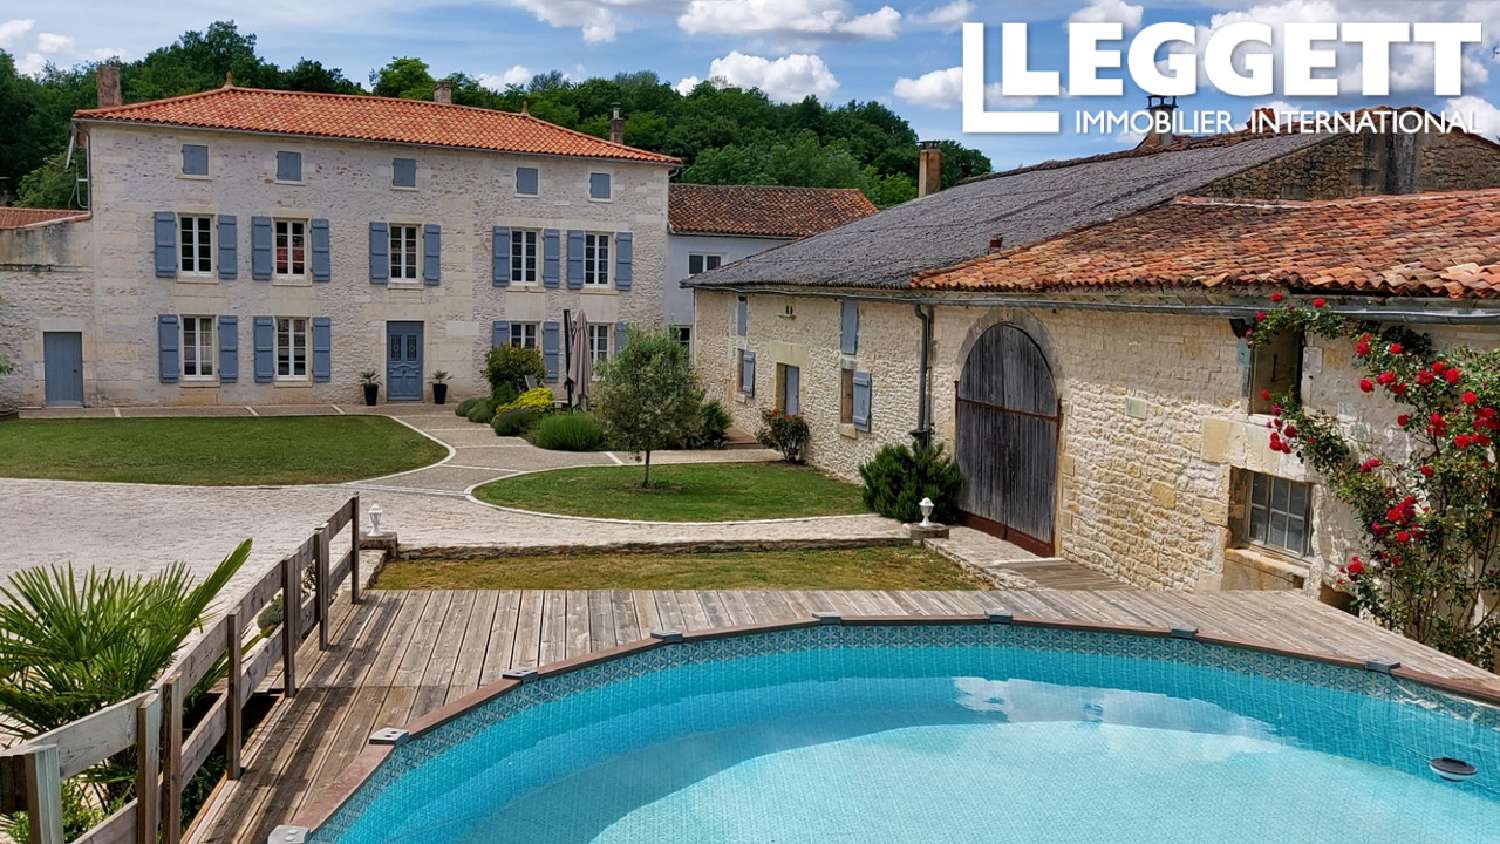  à vendre maison bourgeoise Bourg-Charente Charente 3